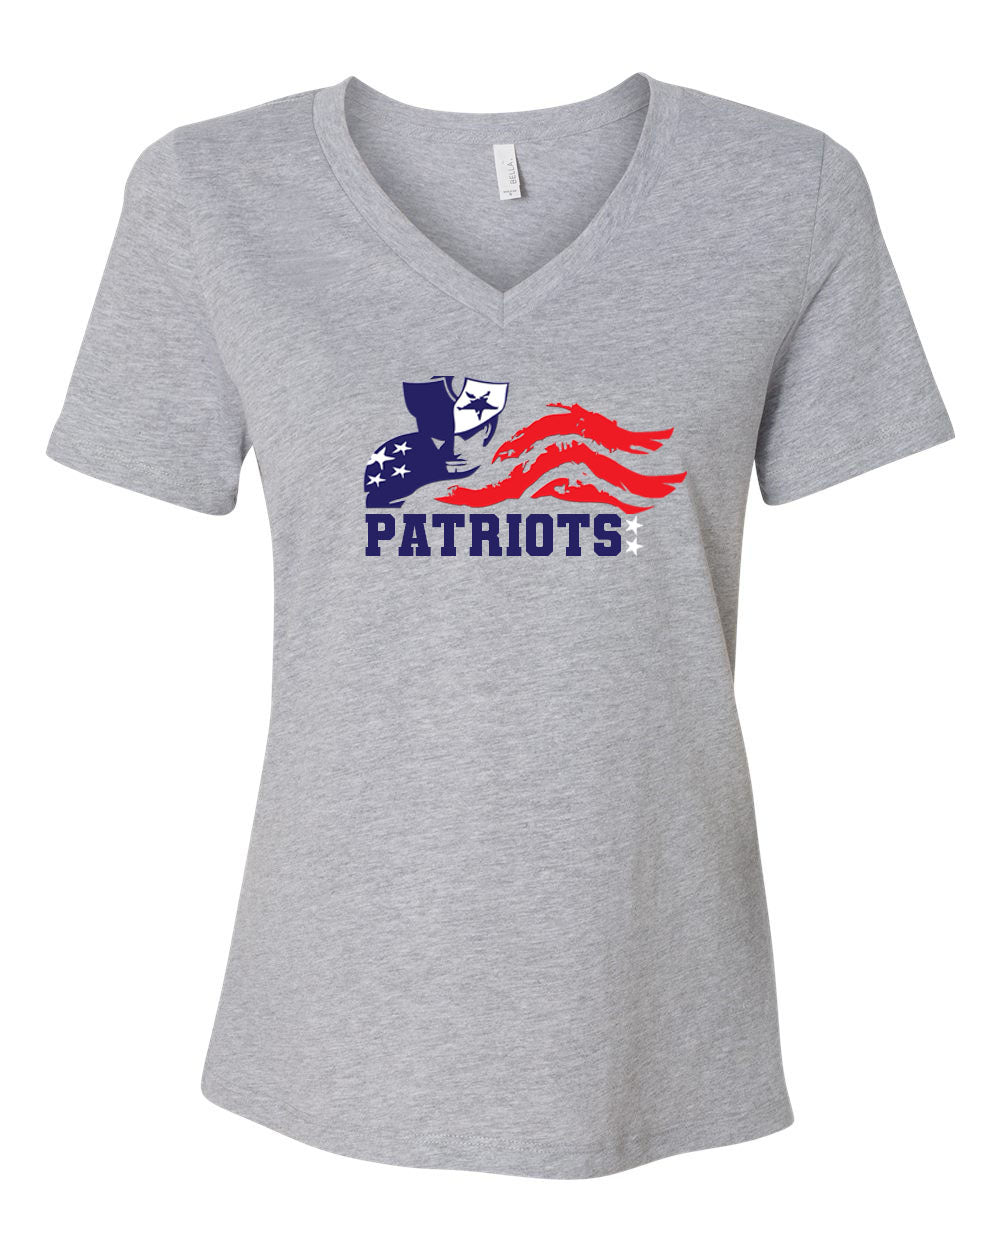 Distressed Patriots logo V-neck T-shirt